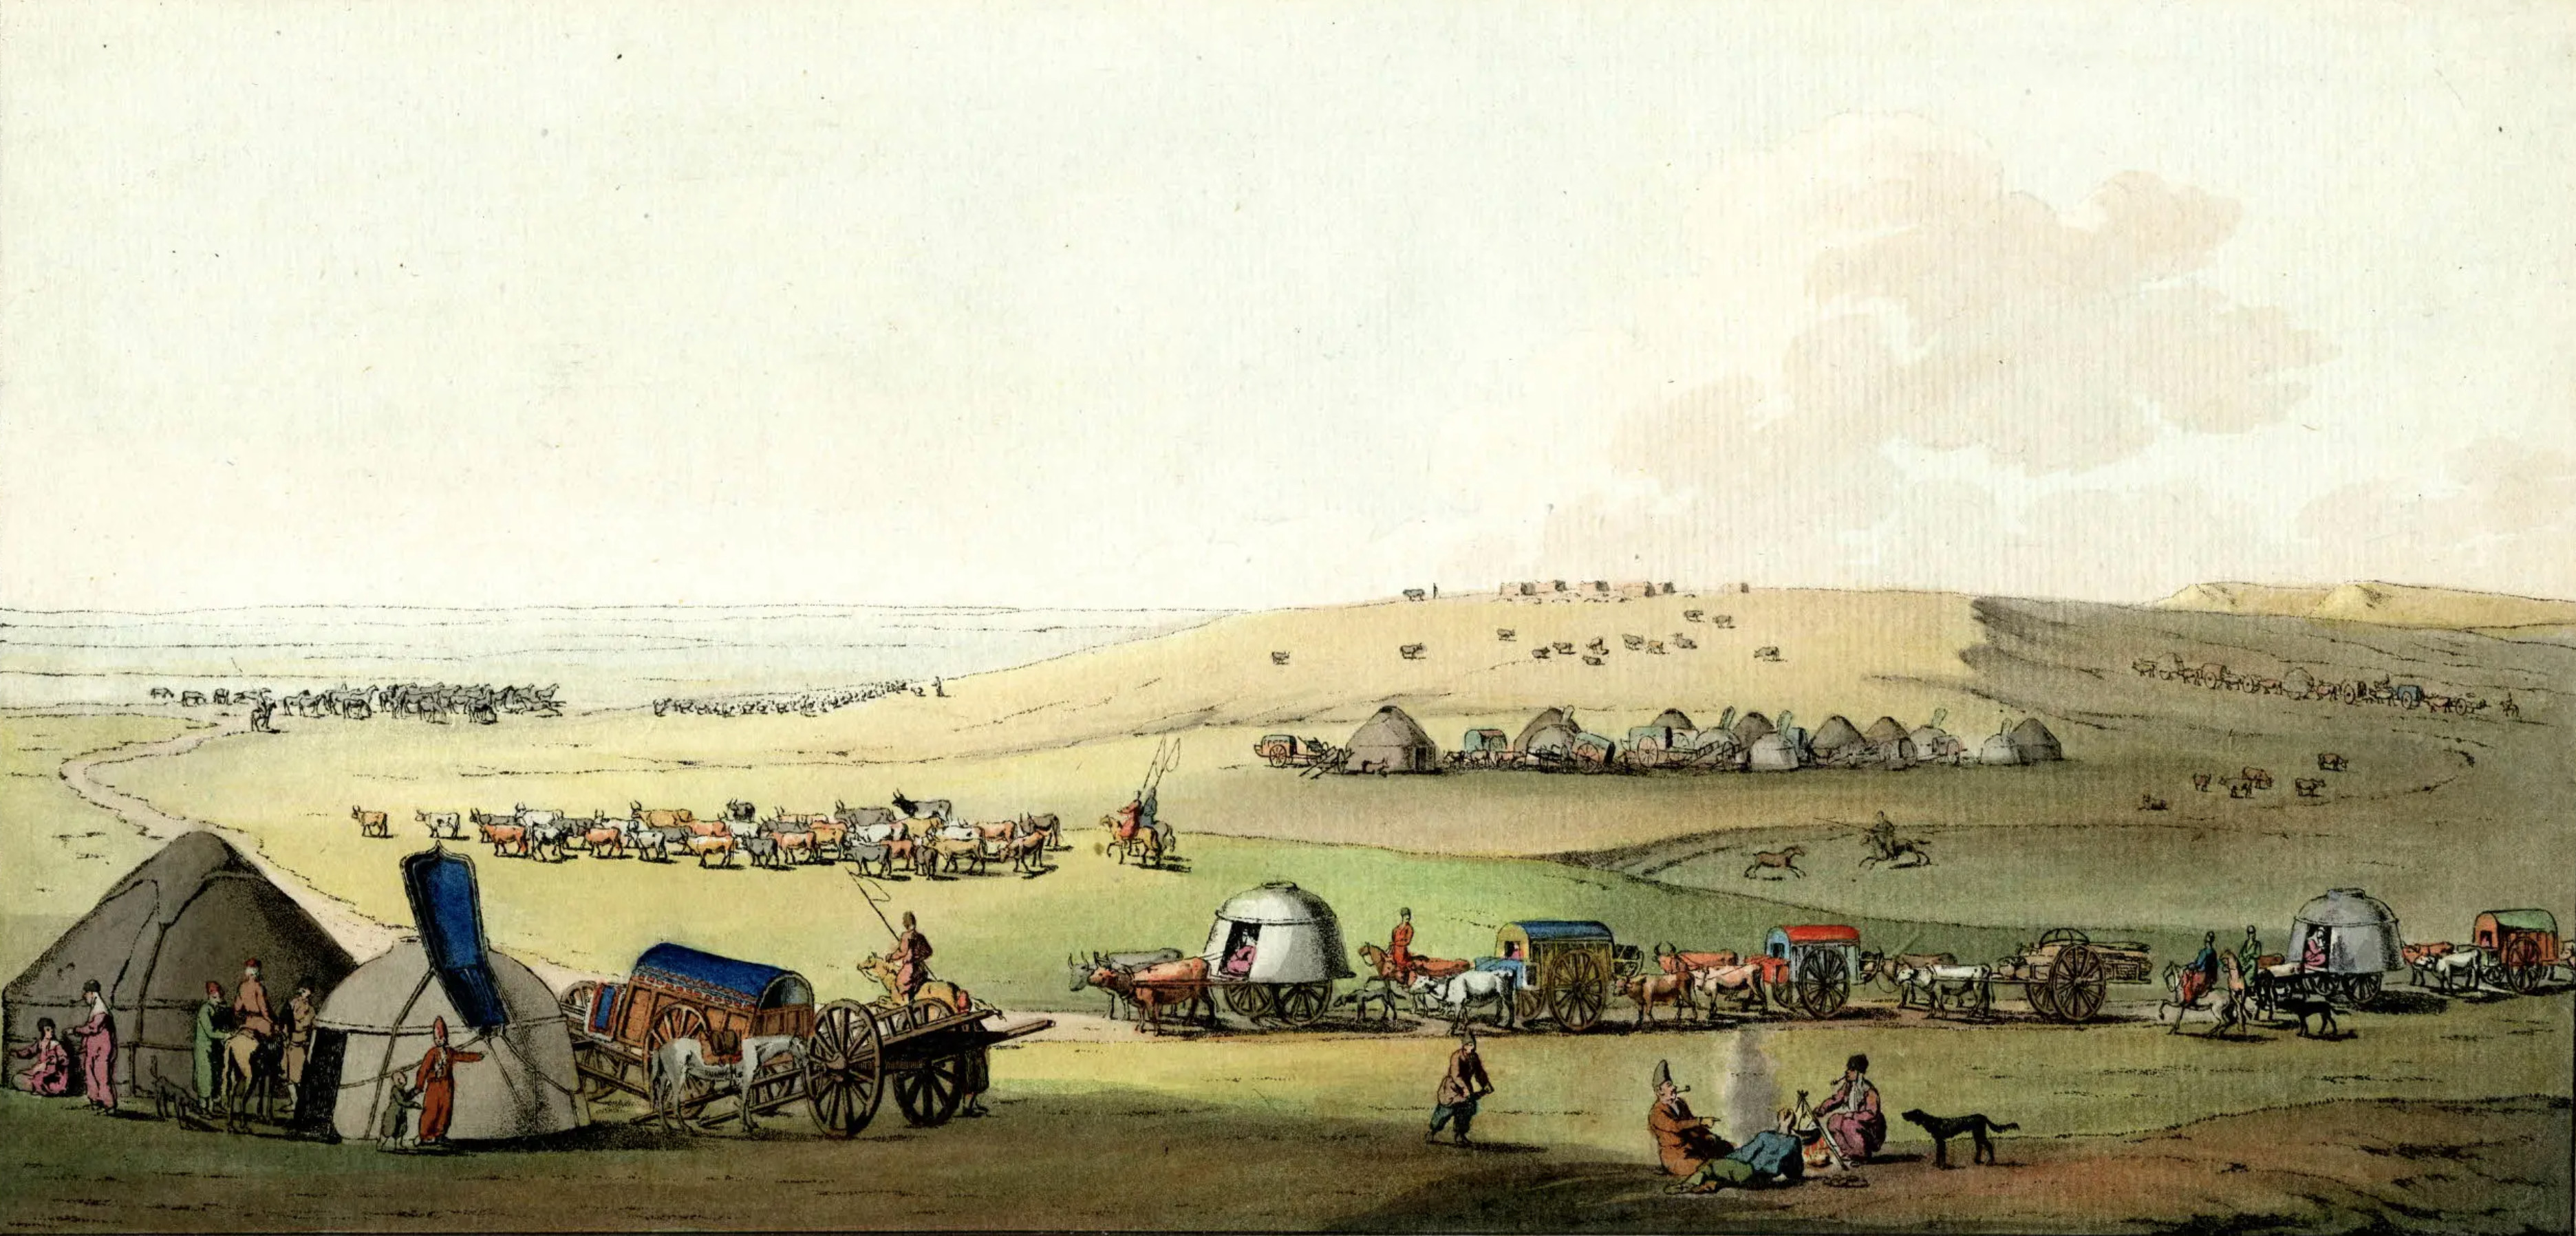 encampment of tatars by Christian Gottfried Heinrich Geissler